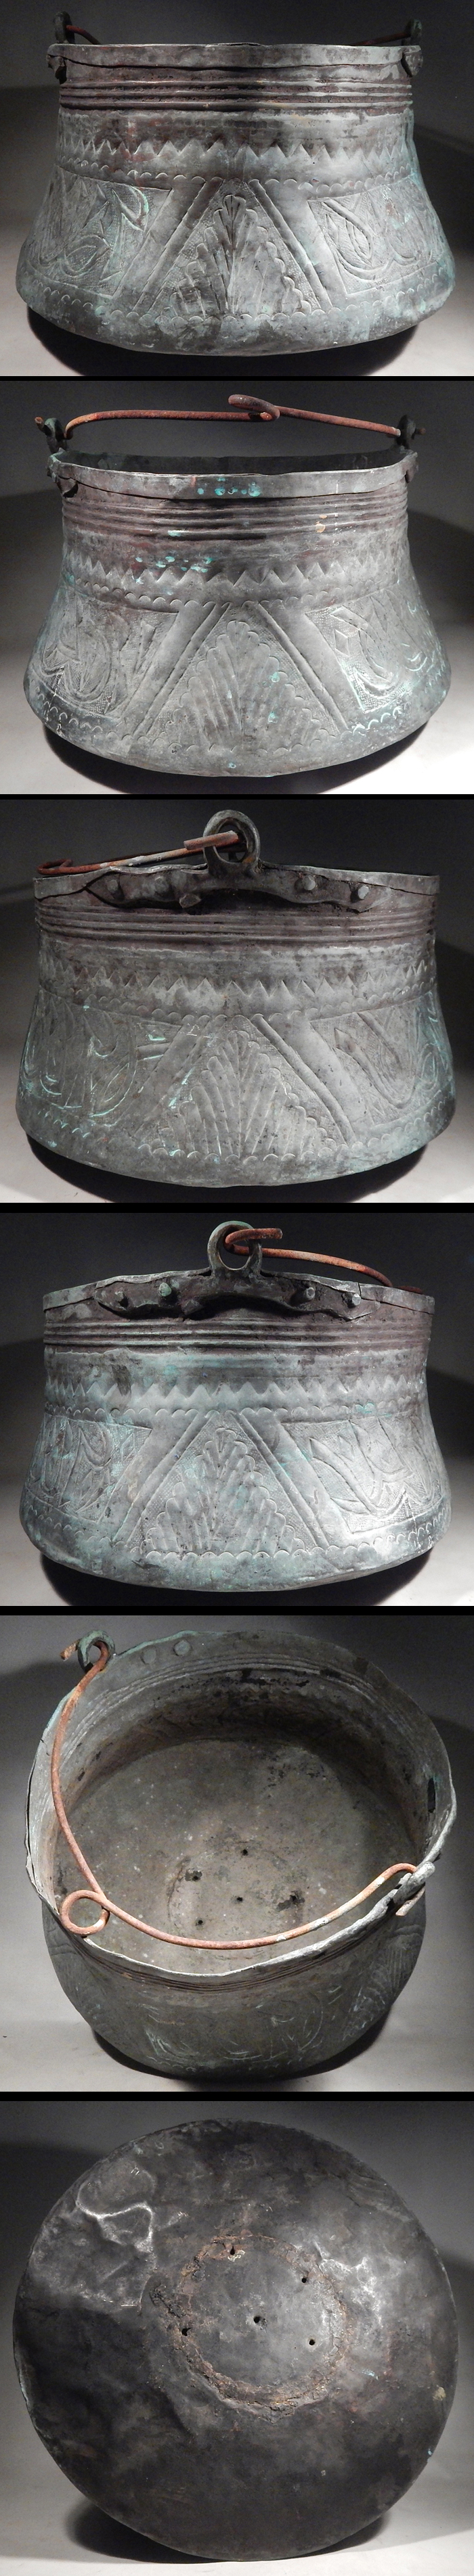 Persian Copper Cauldron Kettle Cooking Pot